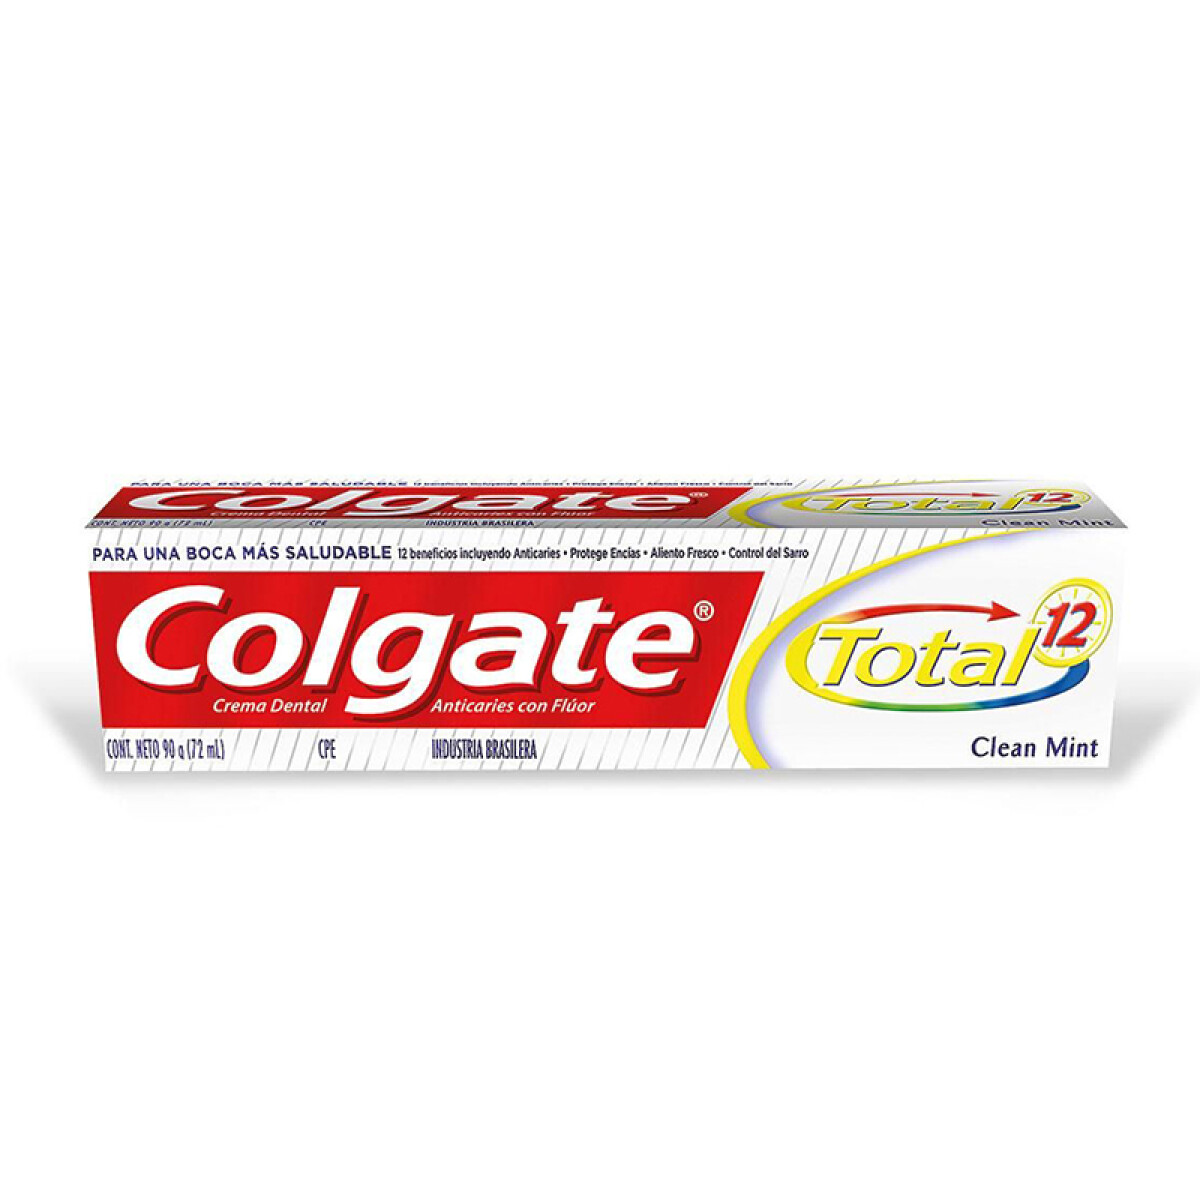 Crema Dental COLGATE Total 12 Clean Mint 90g 